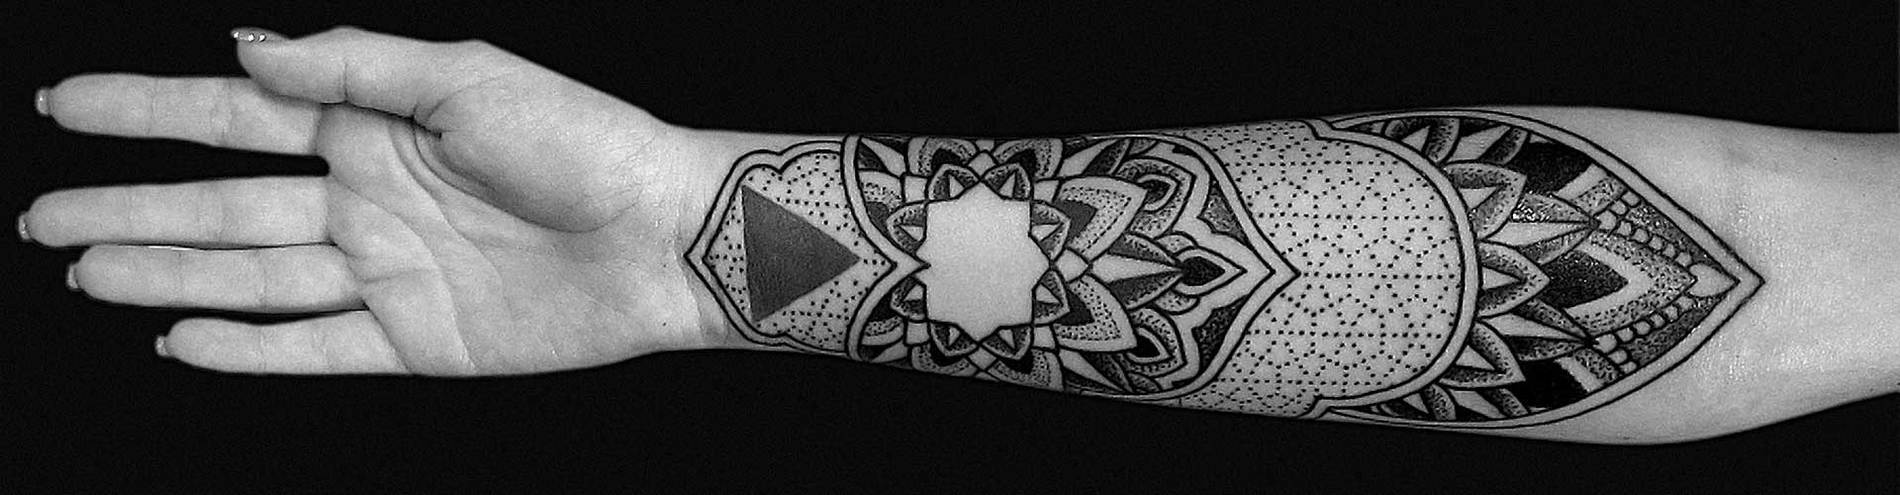 How much will tattoo cost? - Gargoyle Tattoo Auckland